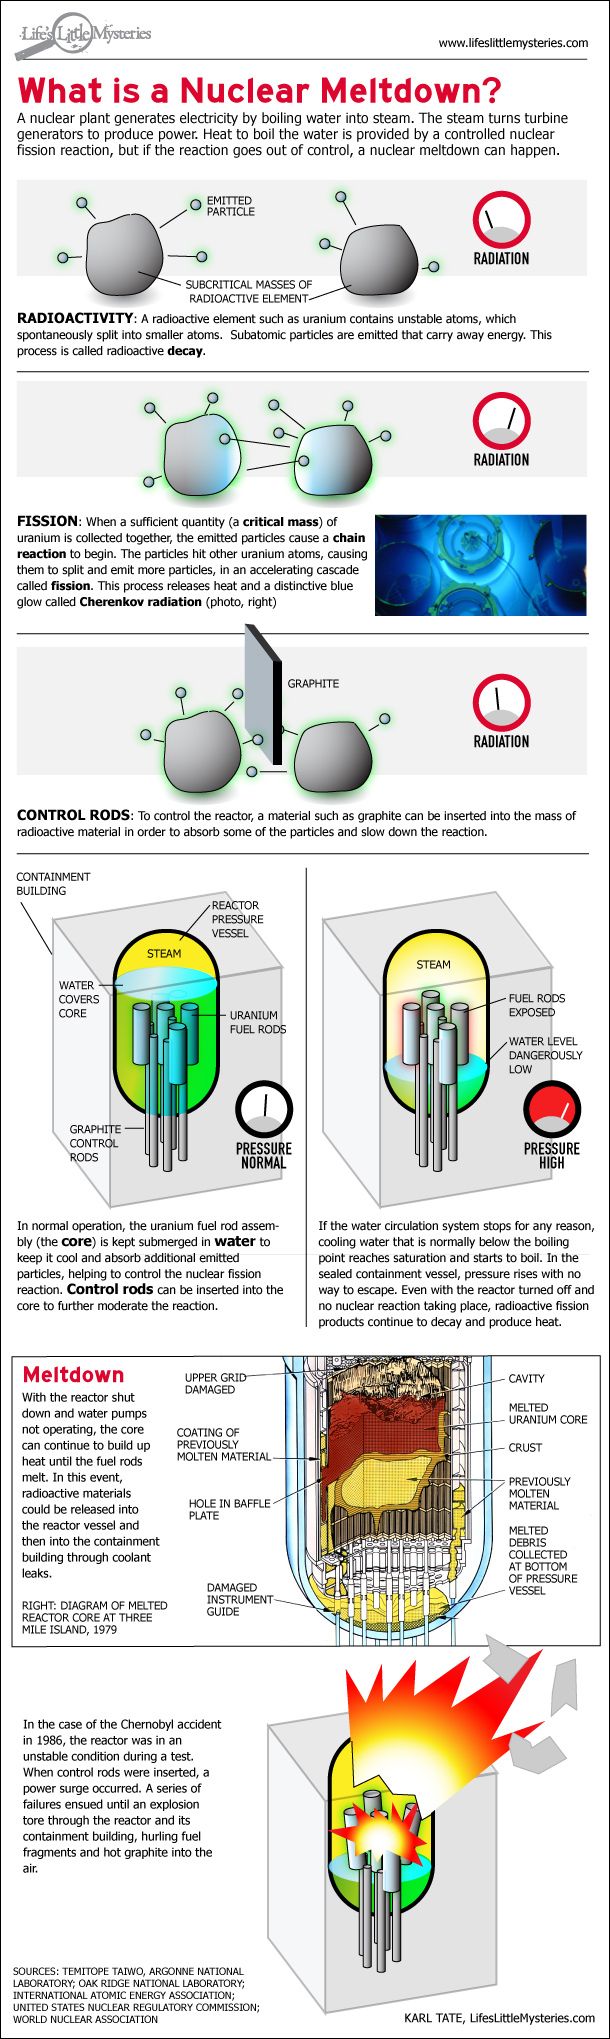 nuclear reactor meltdown sound effect